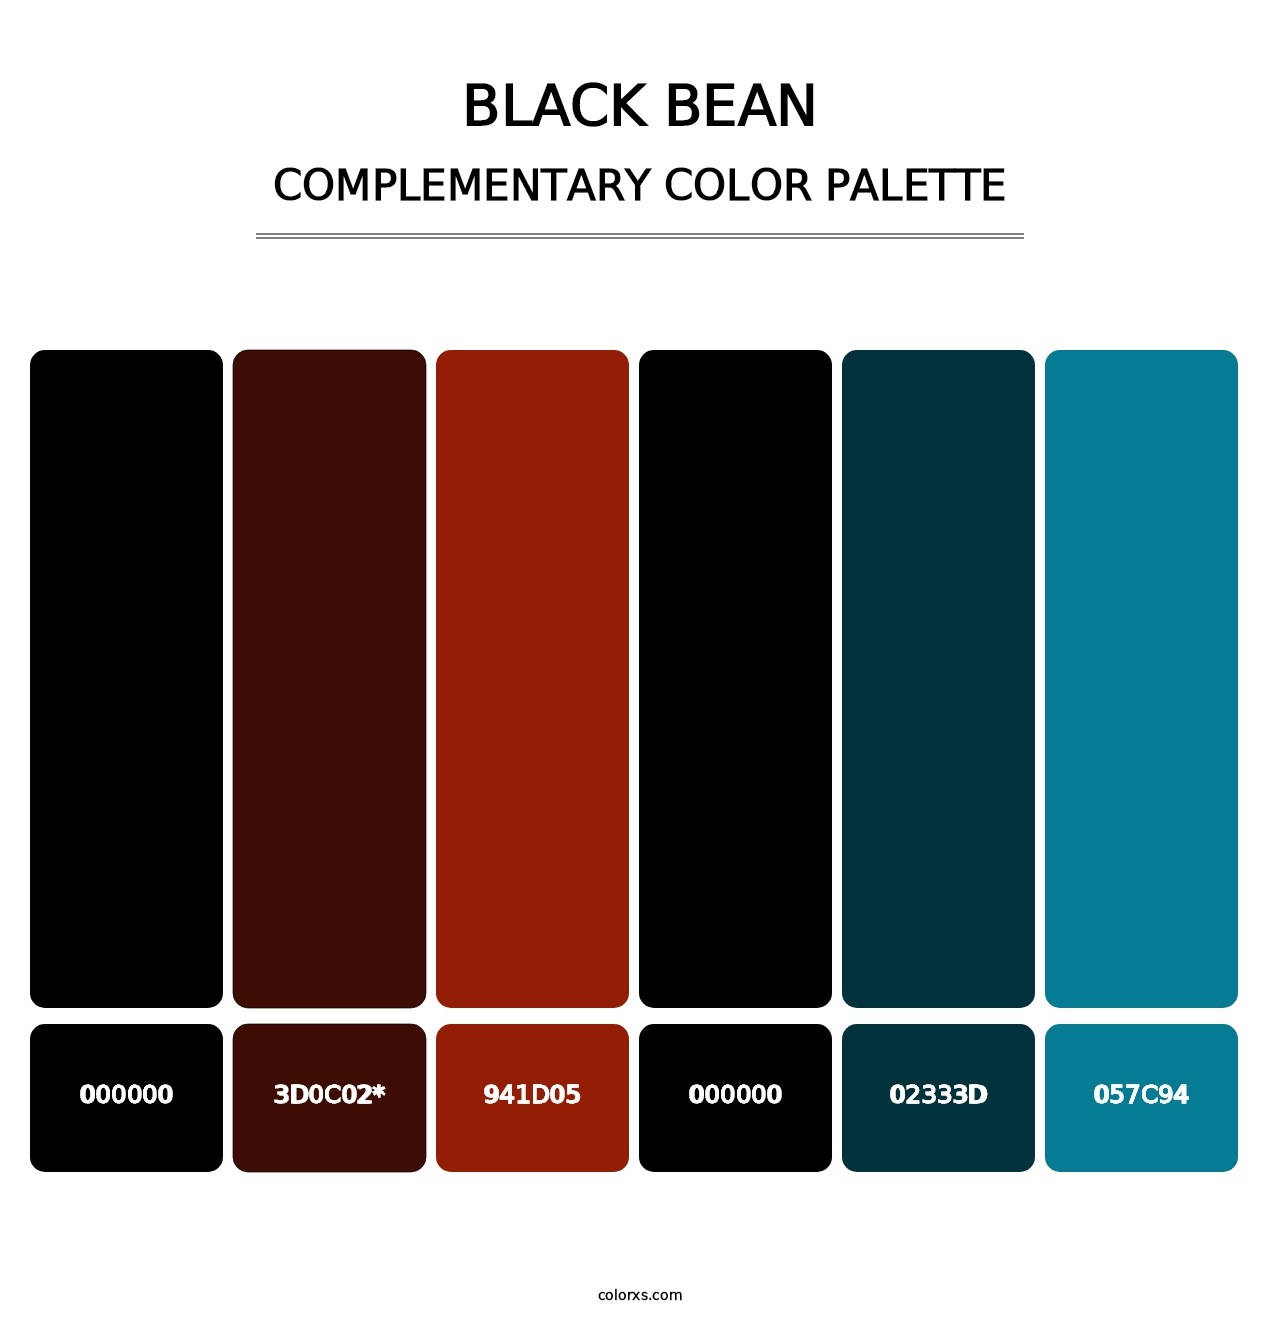 Black Bean - Complementary Color Palette